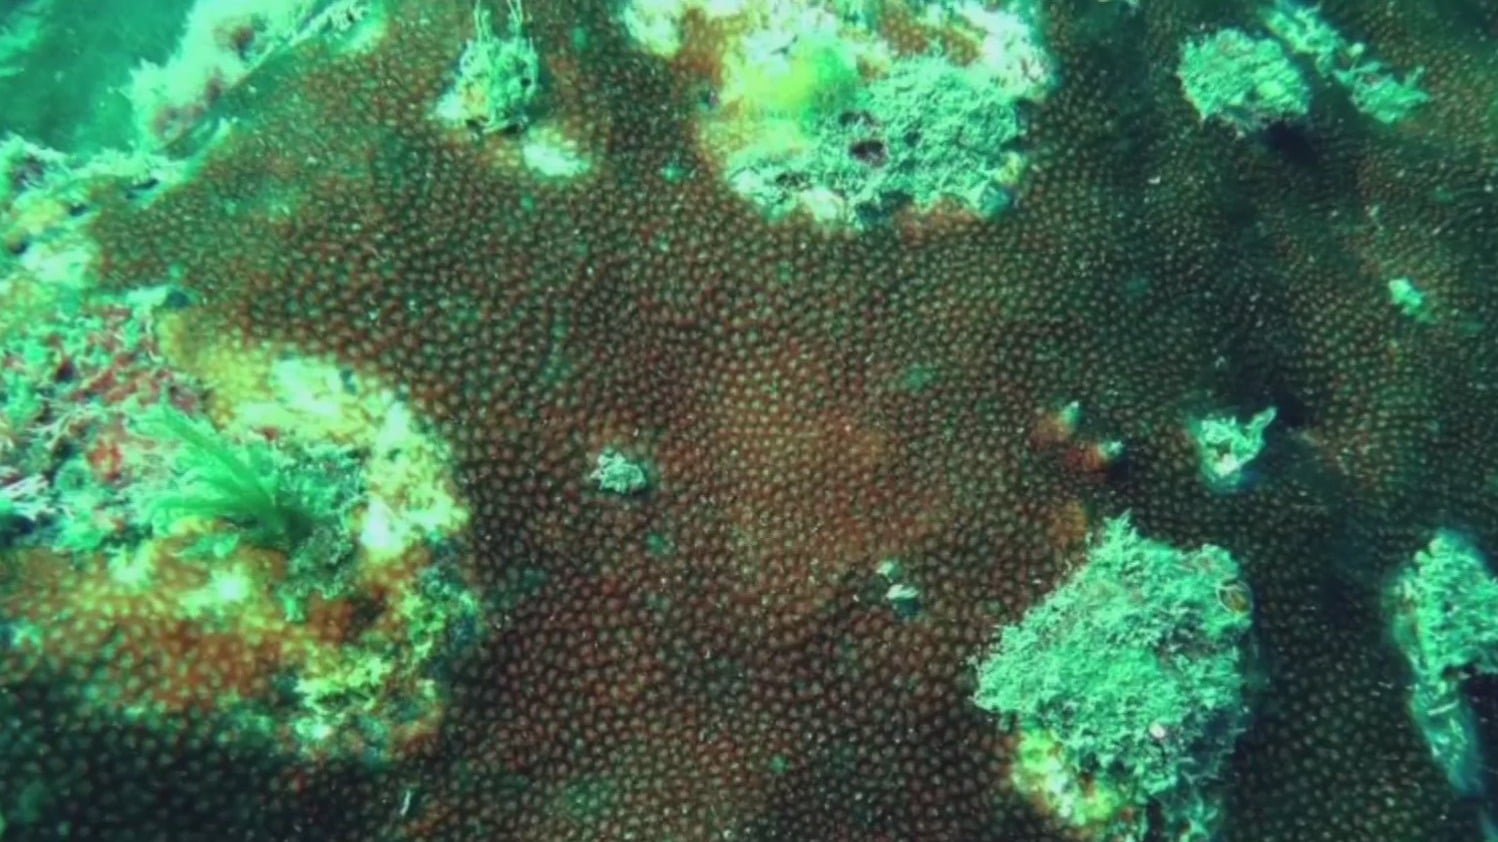 descubren un arrecife de coral en aguas de veracruz